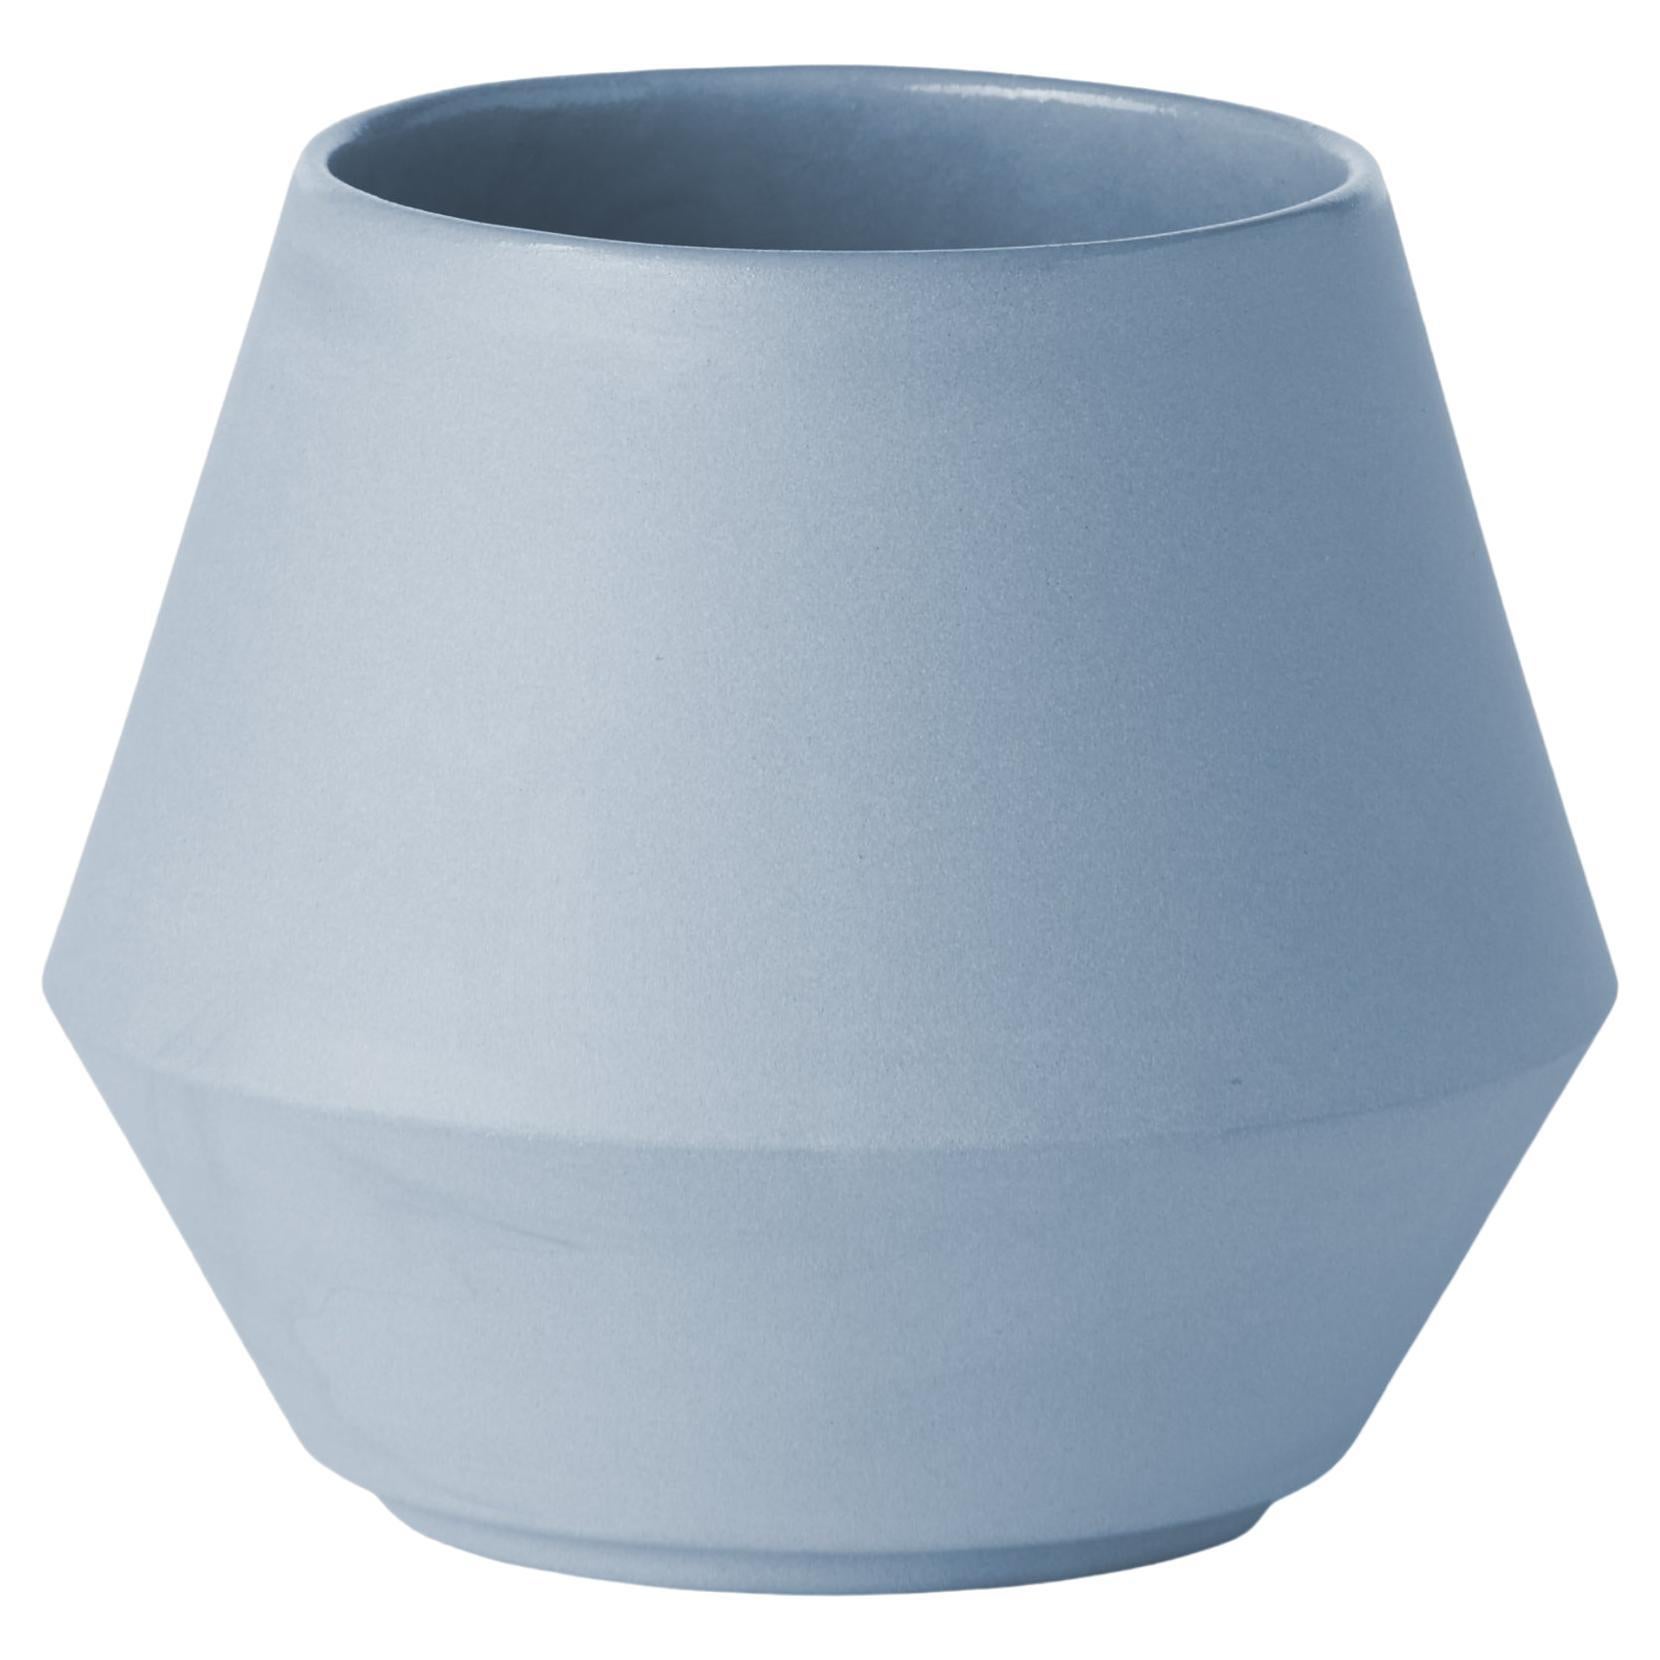 Schneid Studio Unison Sugar Bowl with Lid, Baby Blue For Sale